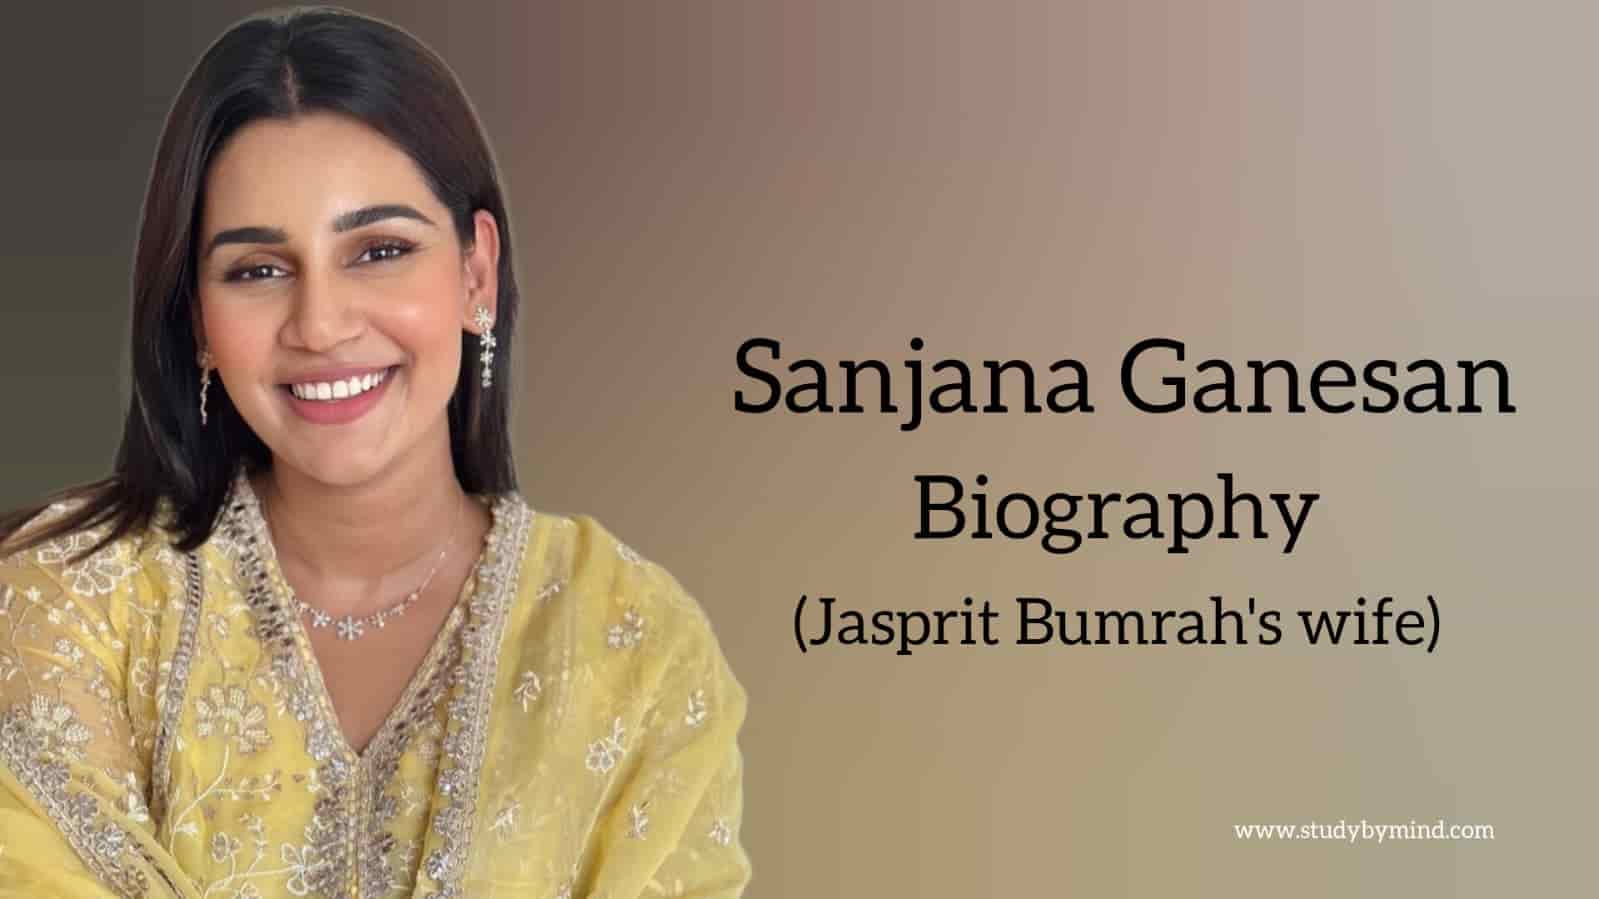 You are currently viewing Sanjana ganesan biography in english (Jaspreet Bumrah’s Wife)